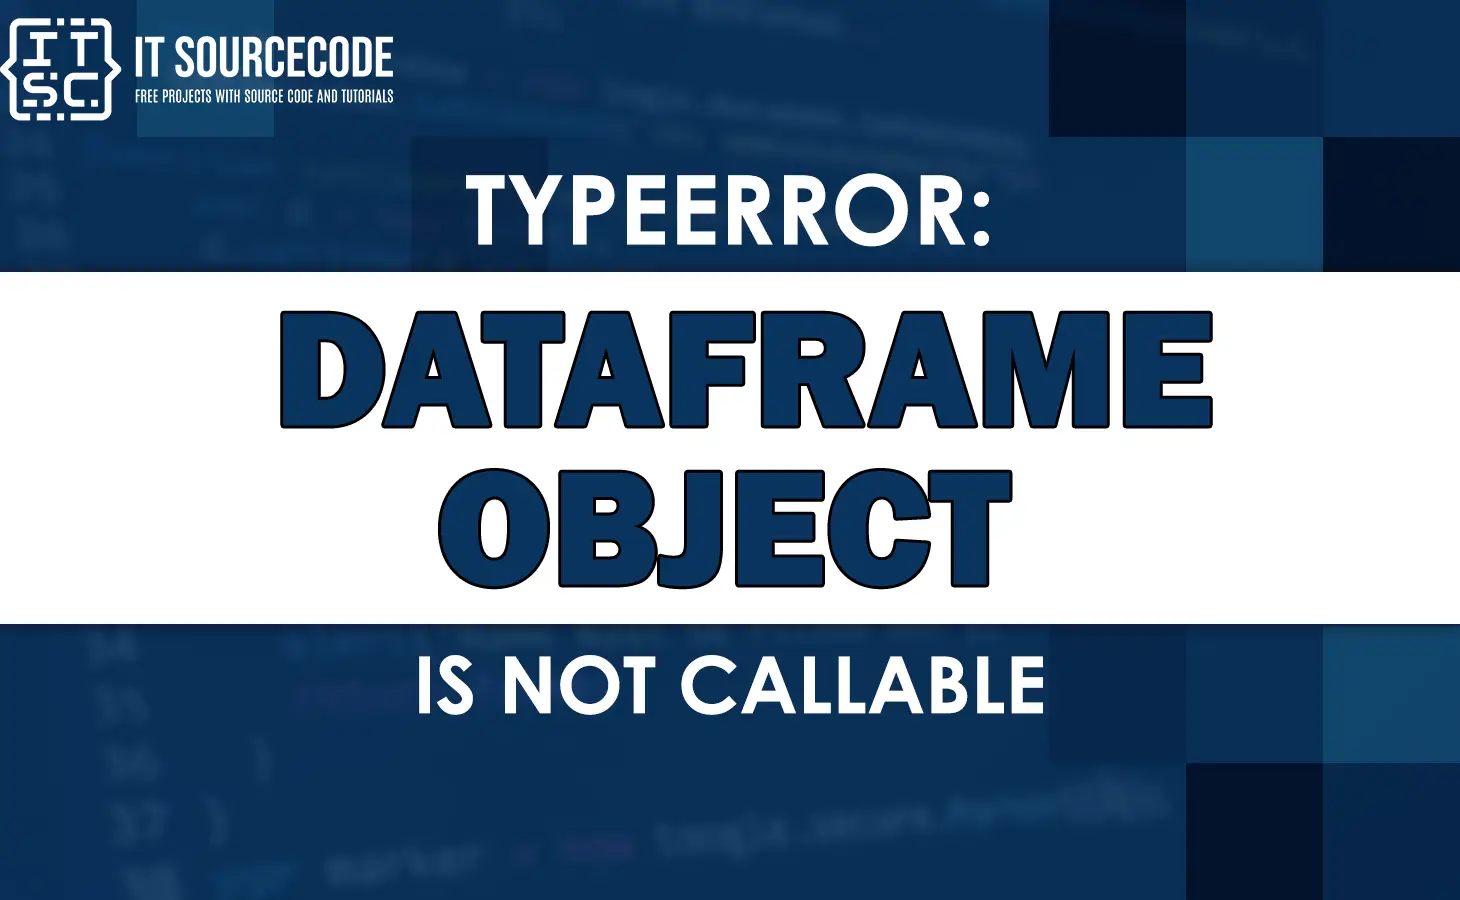 Typeerror 'dataframe' object is not callable